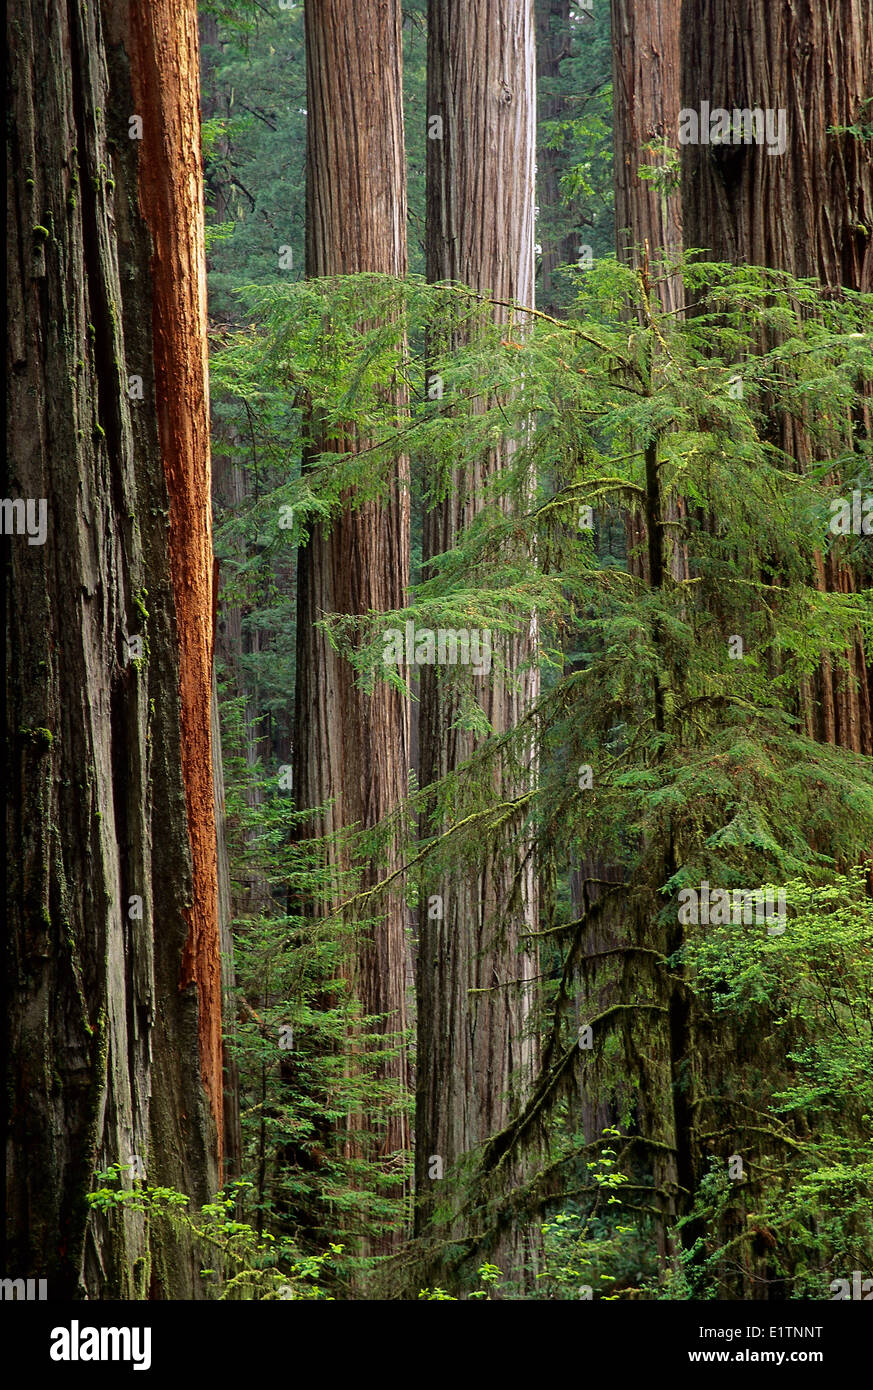 Coastal Redwood, Sequoia sempervirens, California settentrionale, Prairie Creek Redwoods National Park, STATI UNITI D'AMERICA Foto Stock